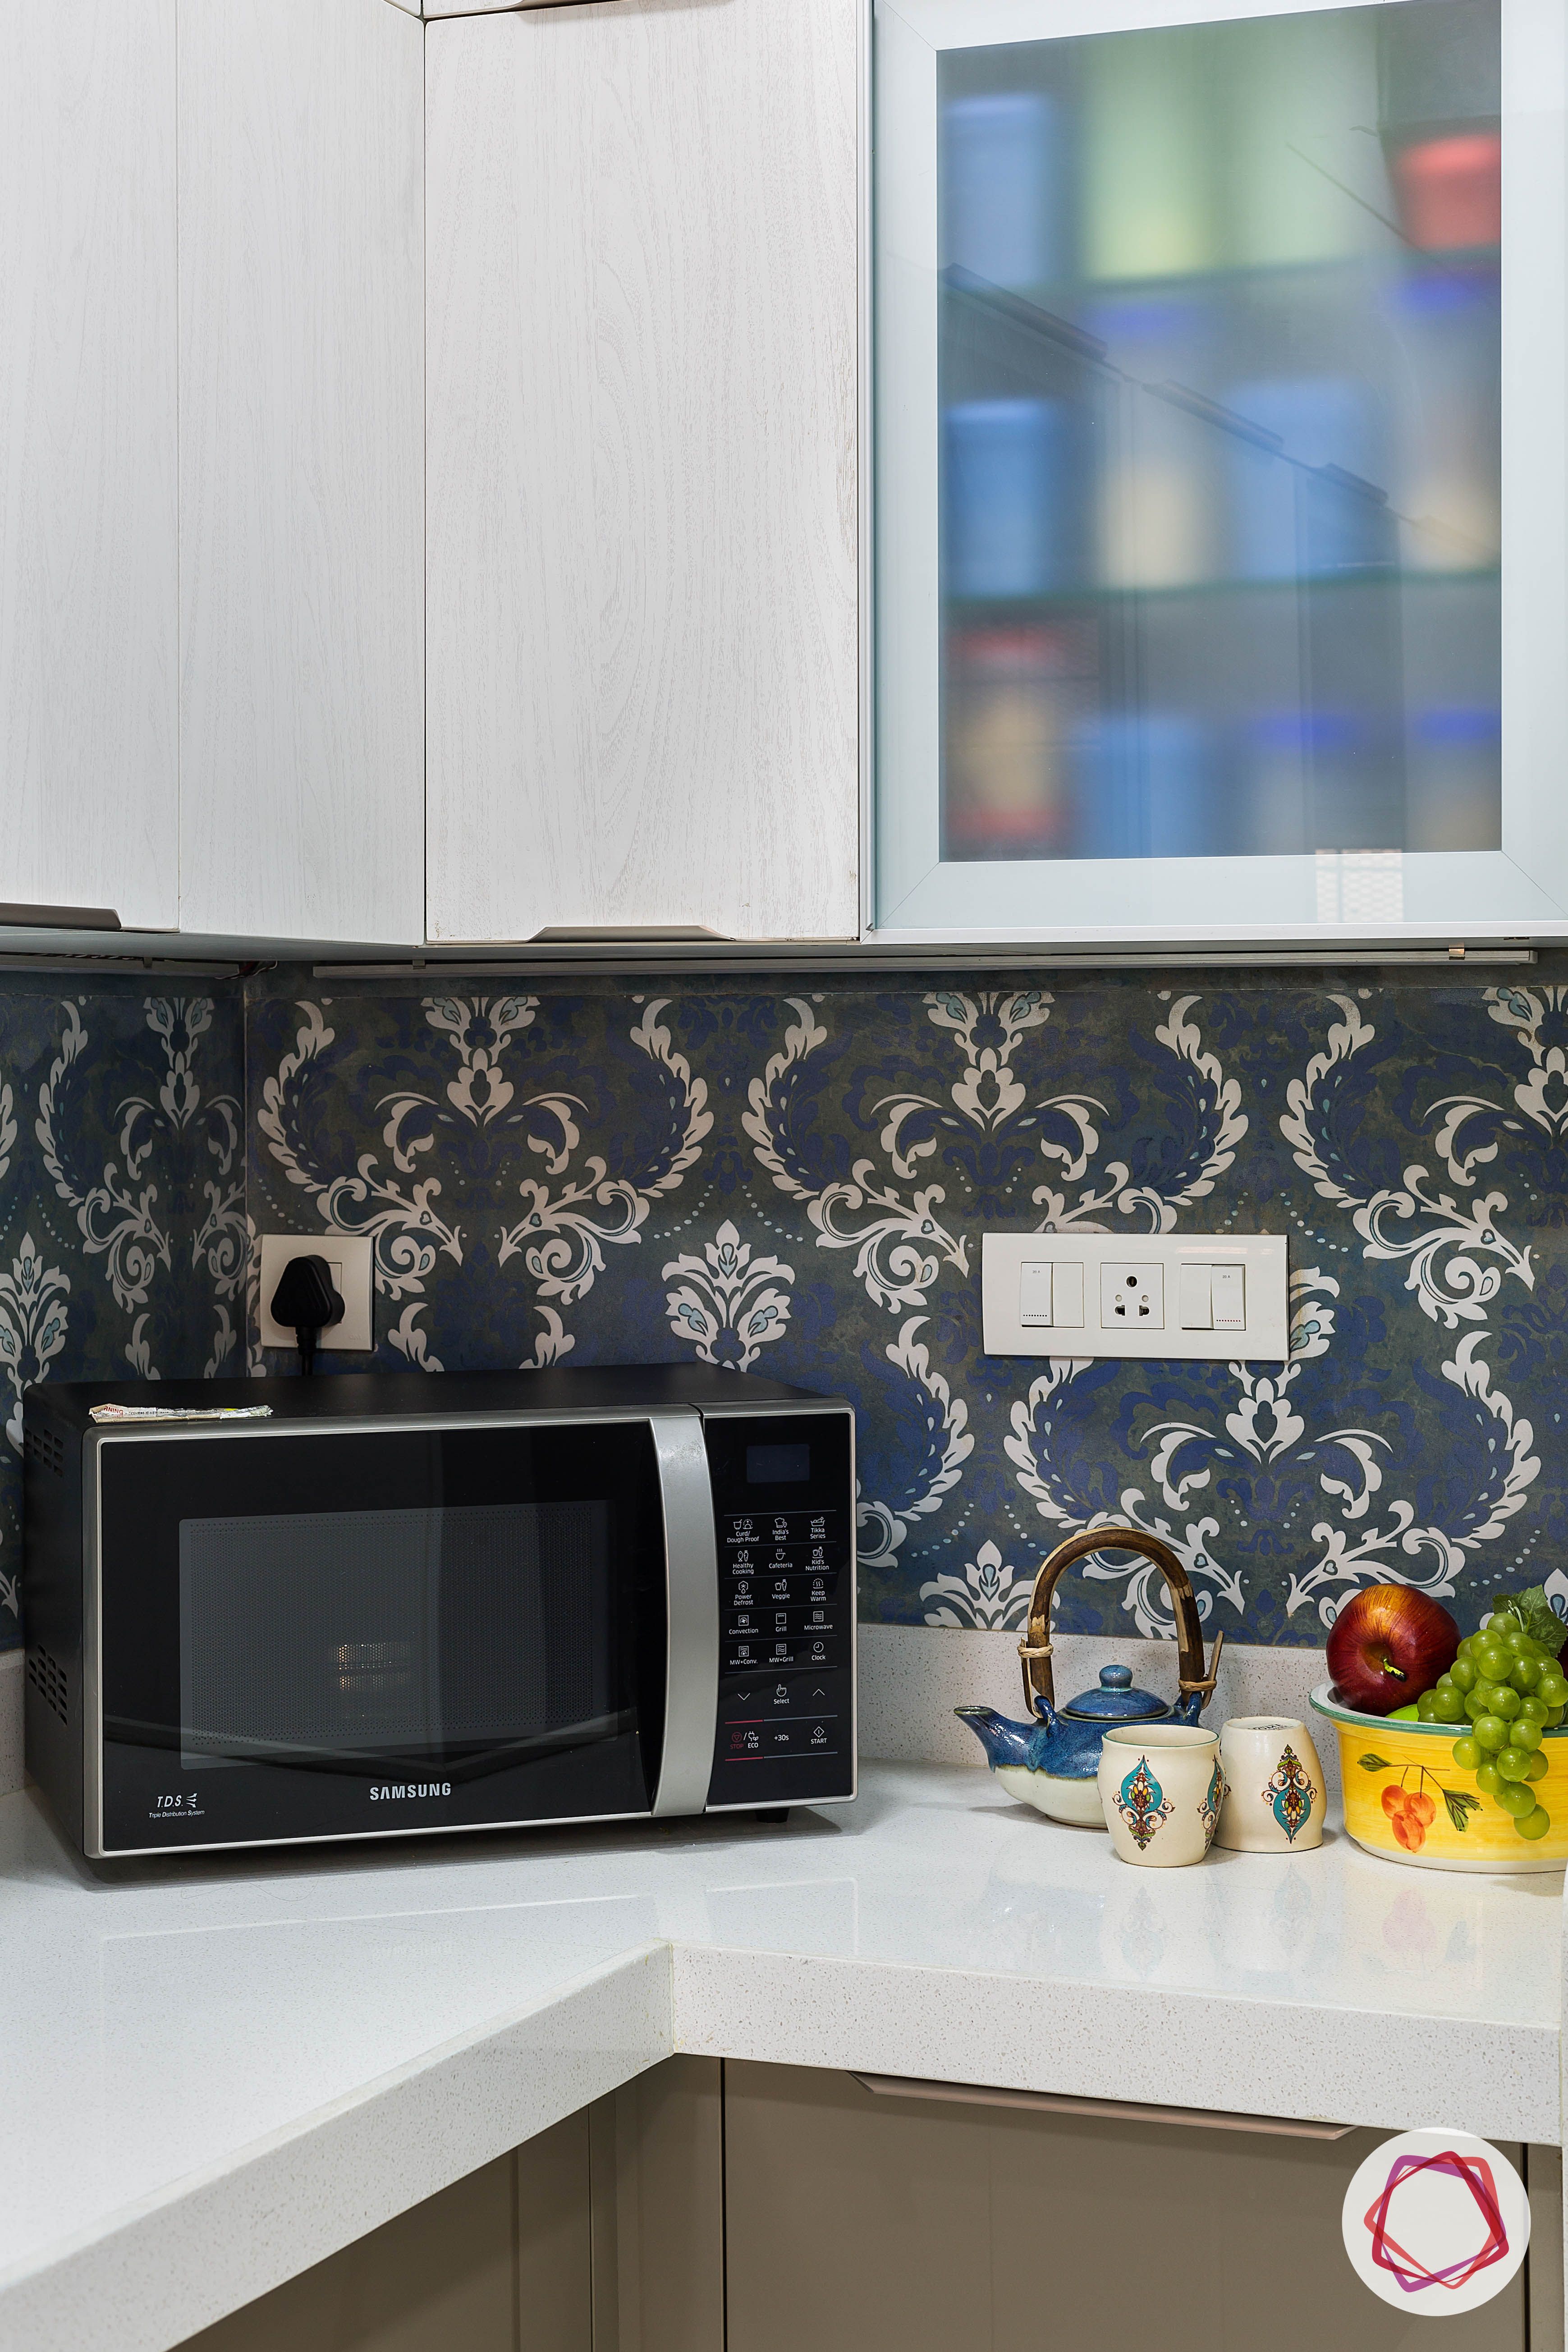 house-renovation-kitchen-backsplash-upper-cabinets-microwave
